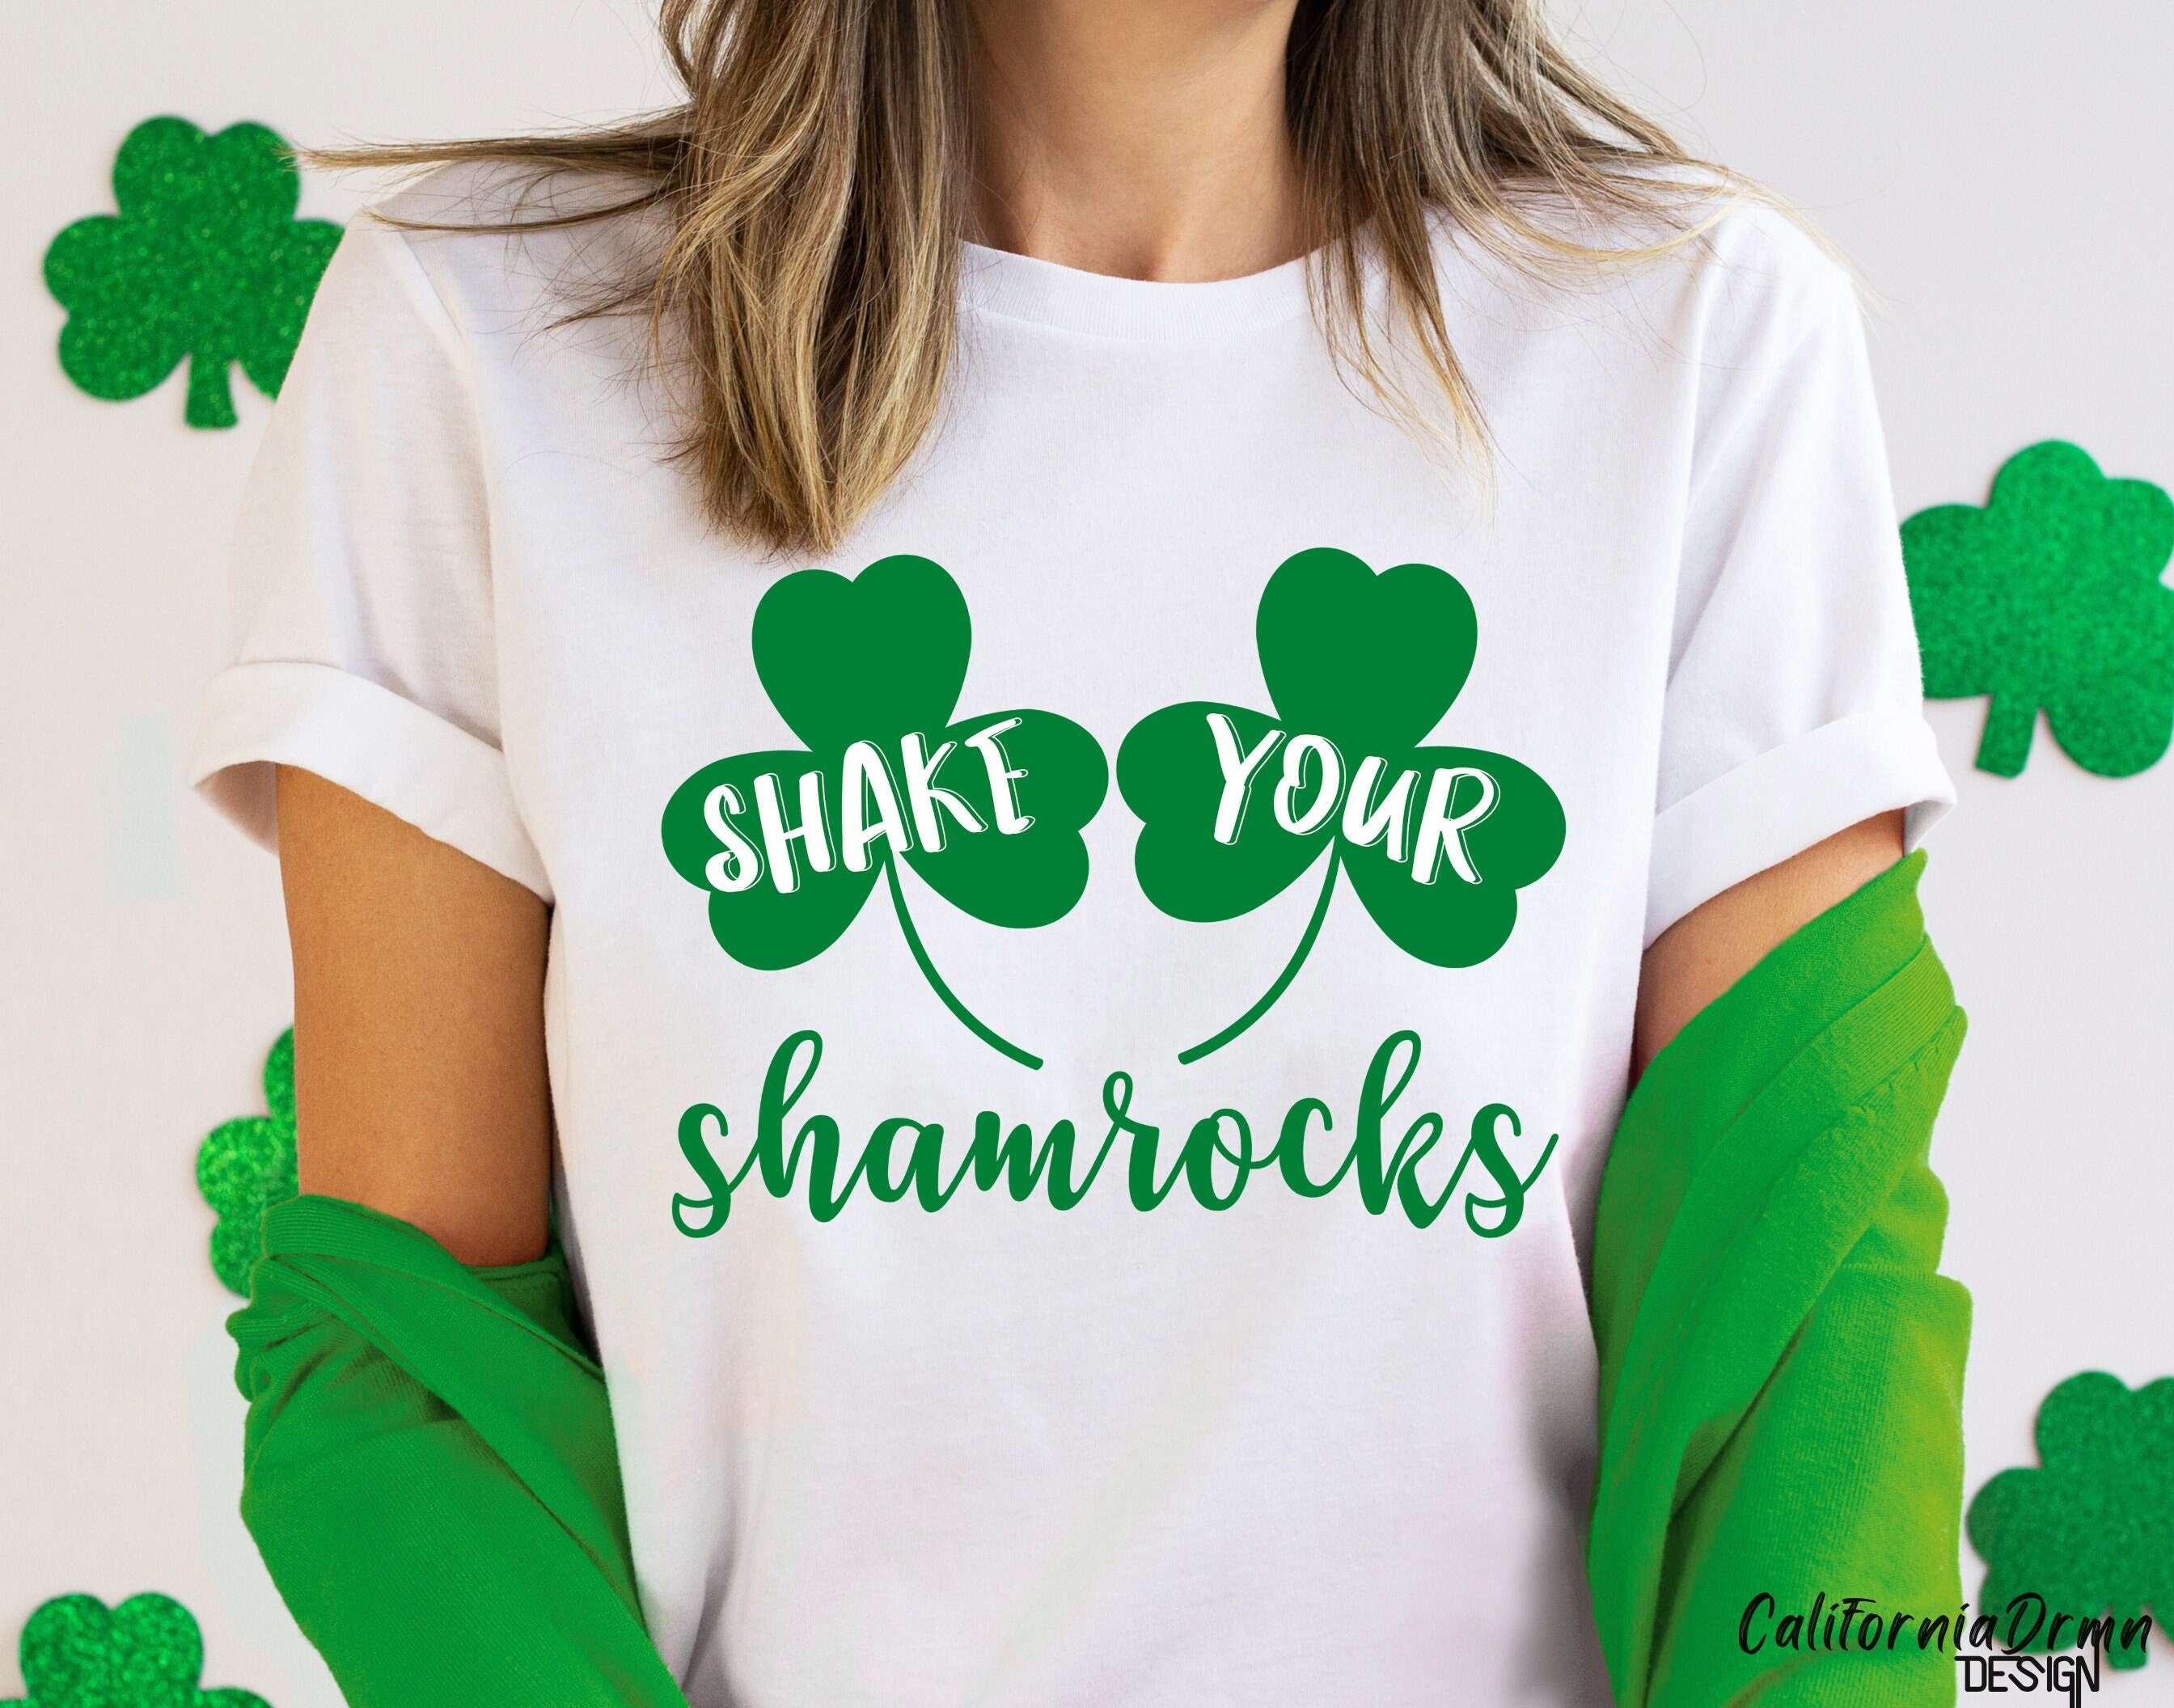 Shake Your Shamrocks Boobs 4 Leaf Clover St Paddys Day Unisex T-Shirt